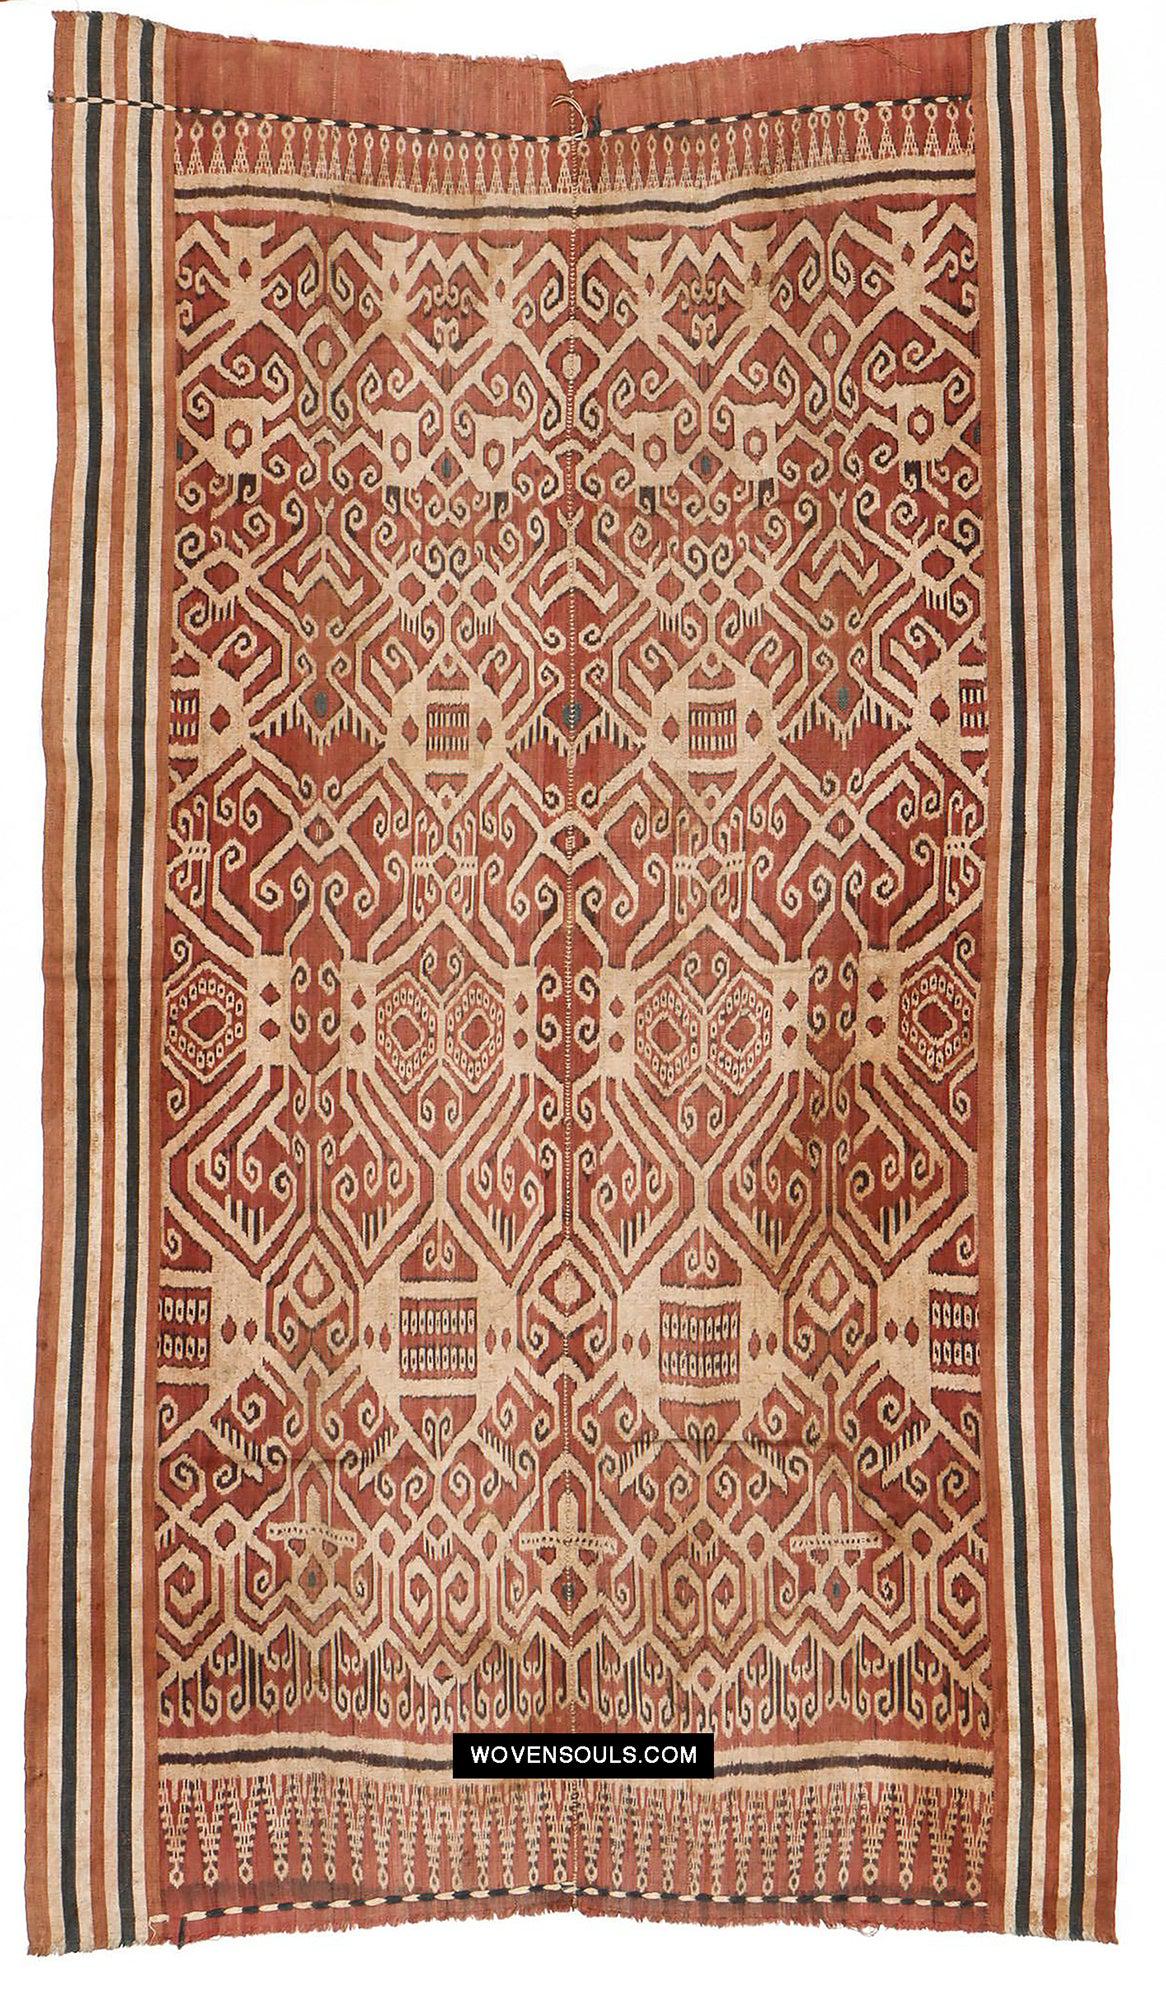 1845 Antique Iban Ceremonial Ikat - Shield pattern